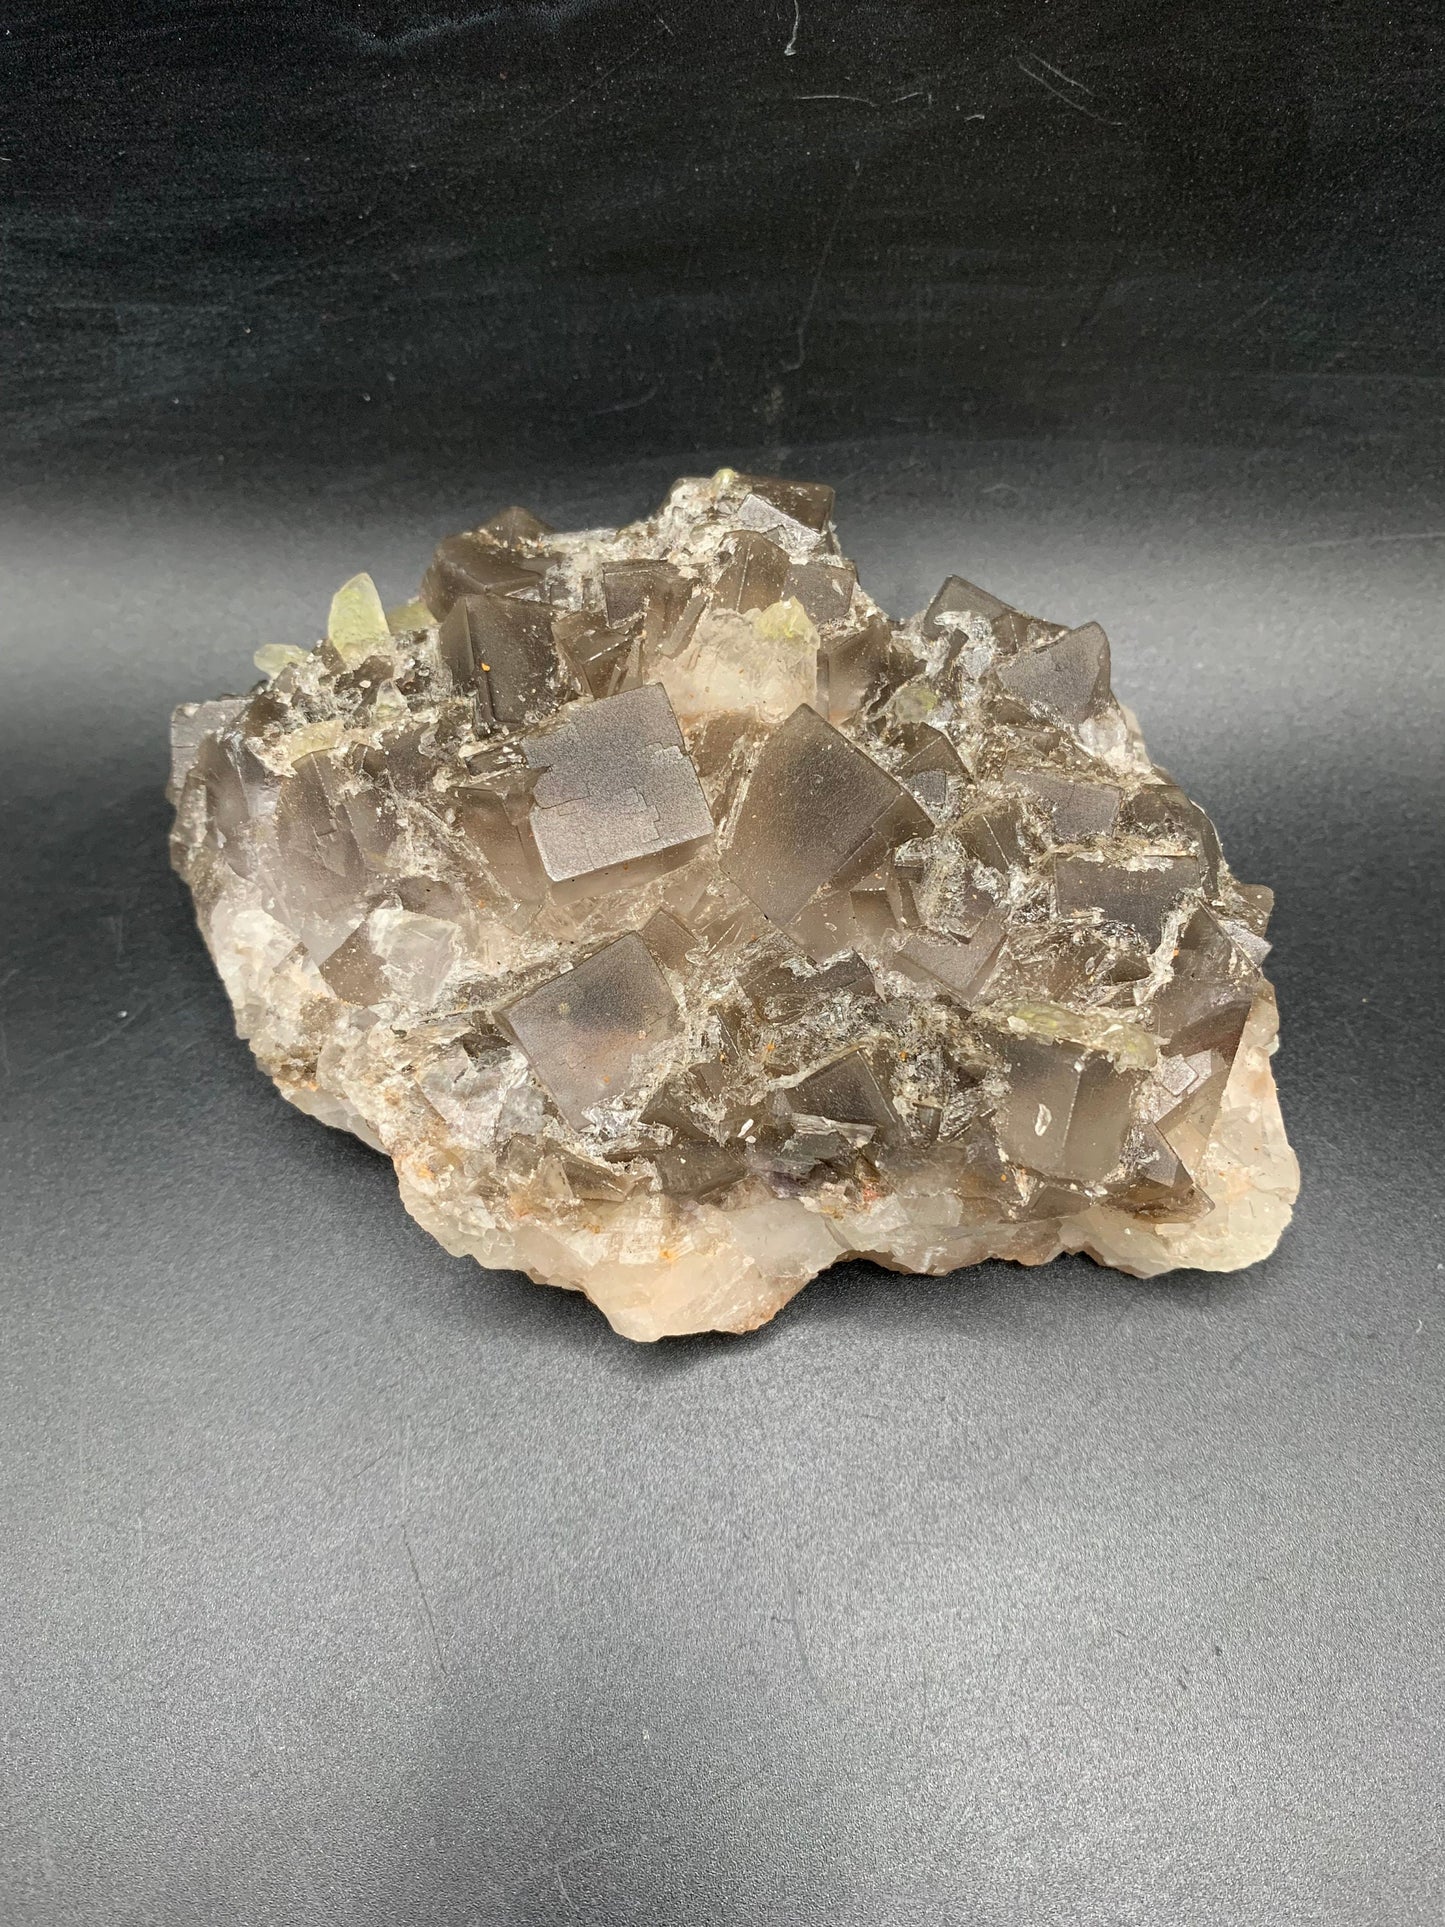 Fascinating Fluorite and Calcite